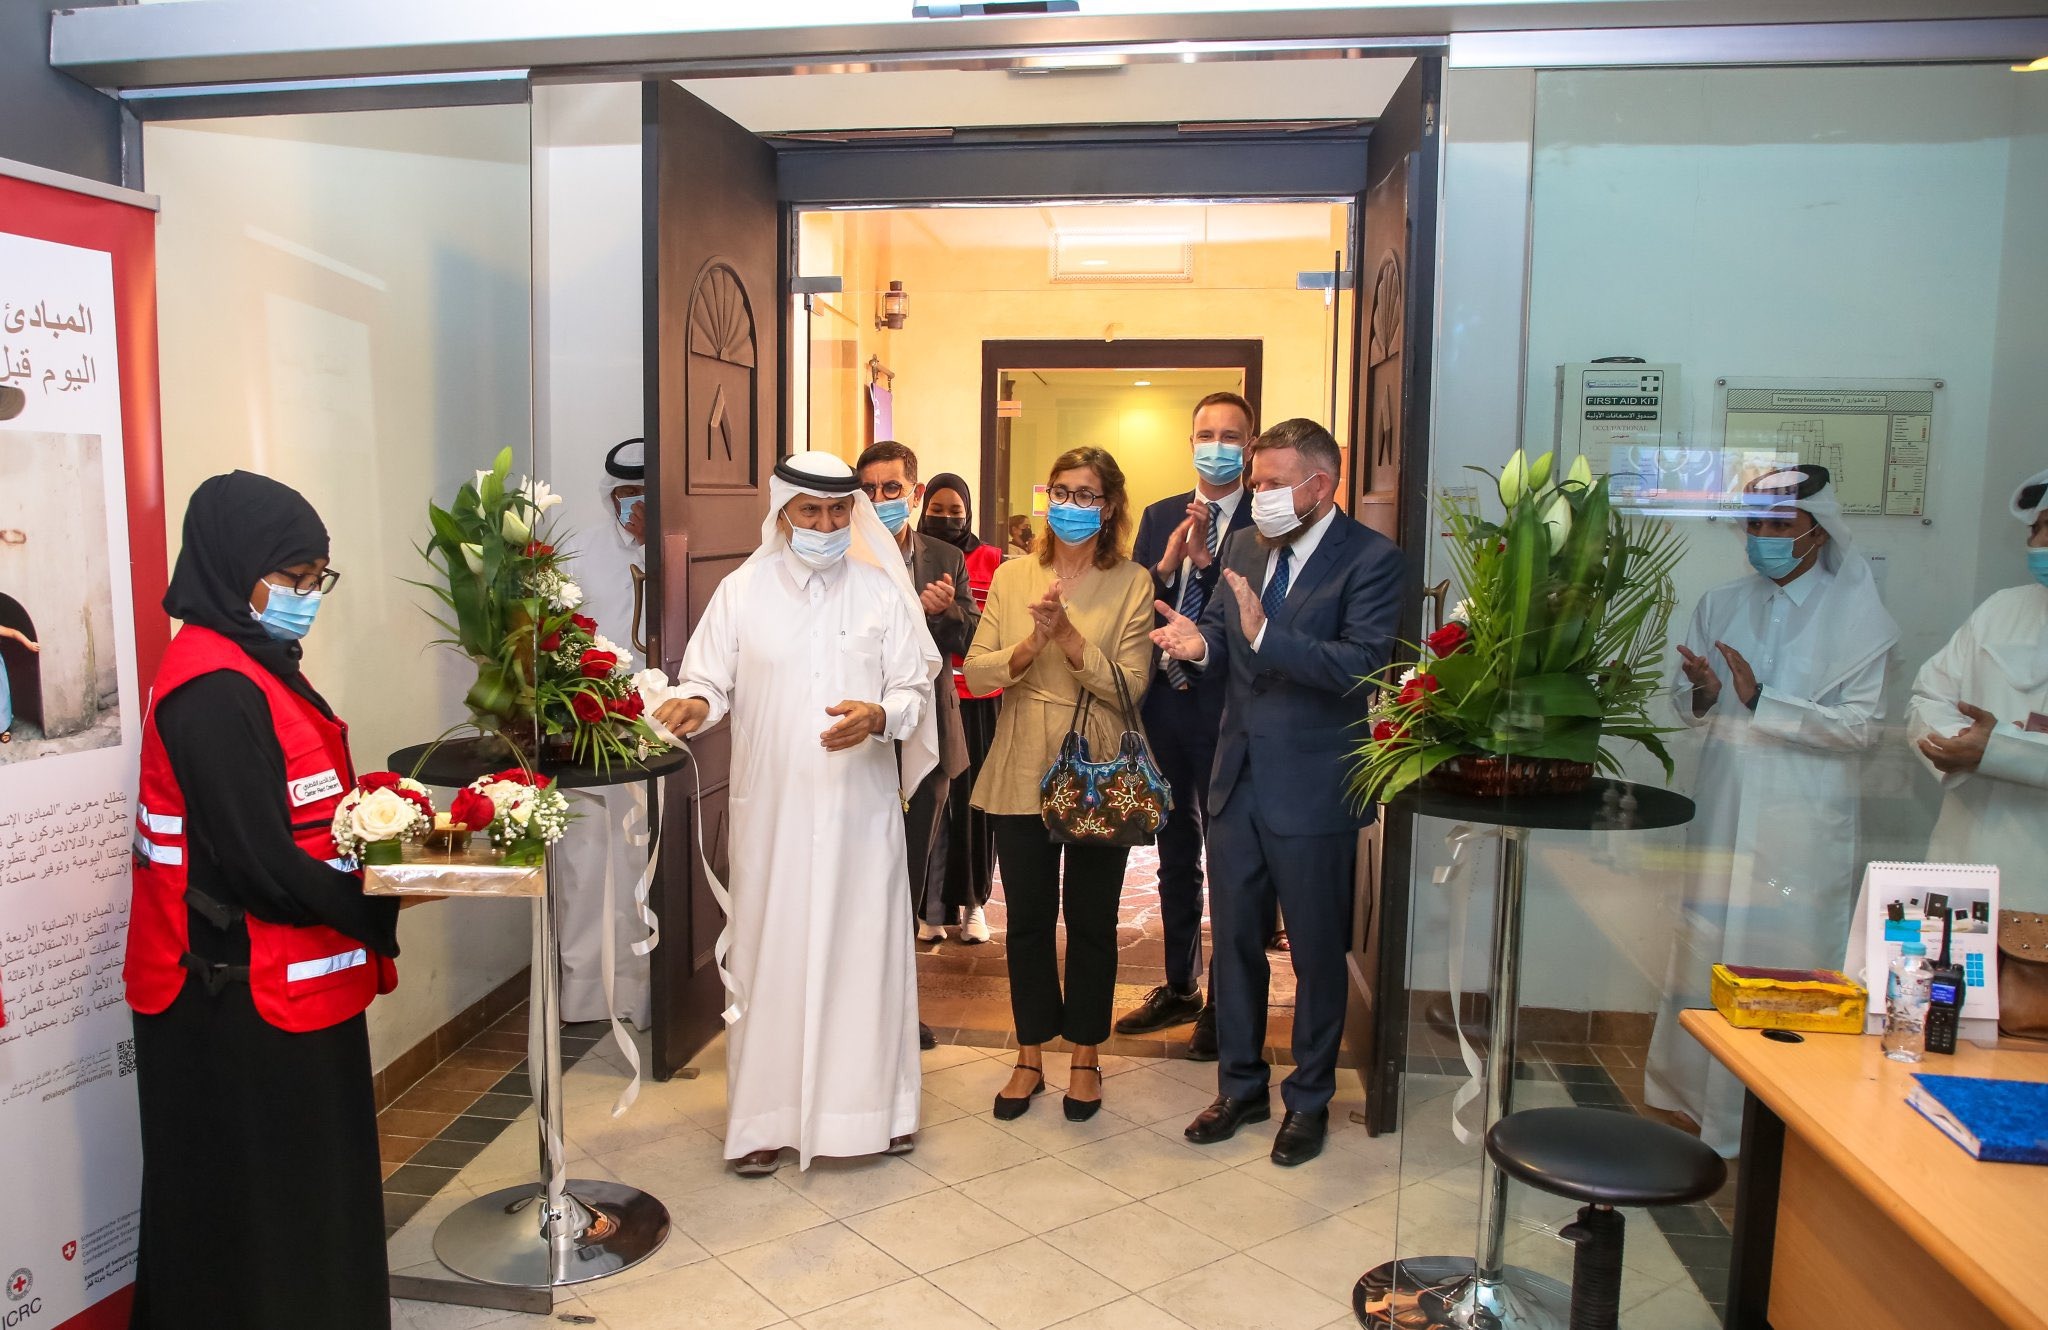 QRCS launches Humanitarian Exhibition Tour at Katara